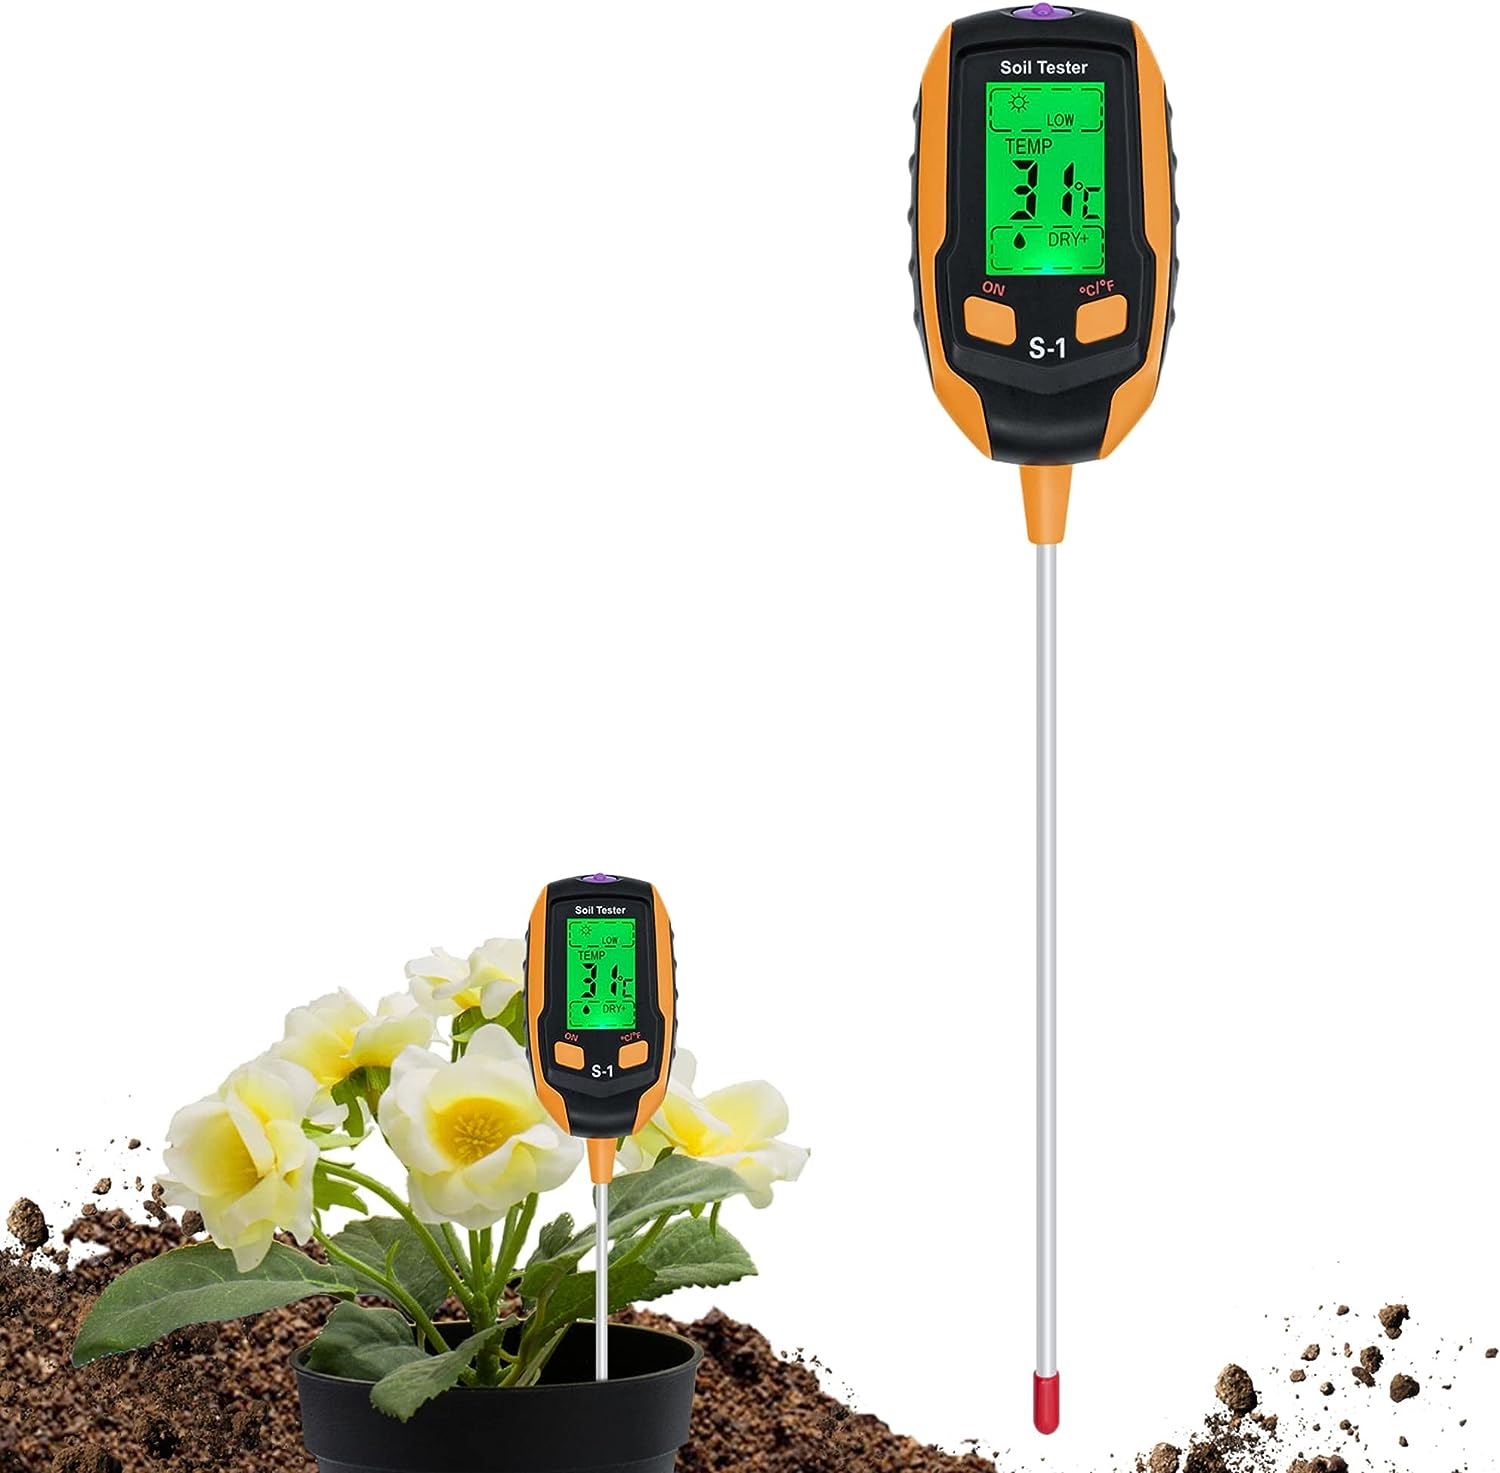 Plant Garden Soil Meter: Light, Moisture, pH, Temperature